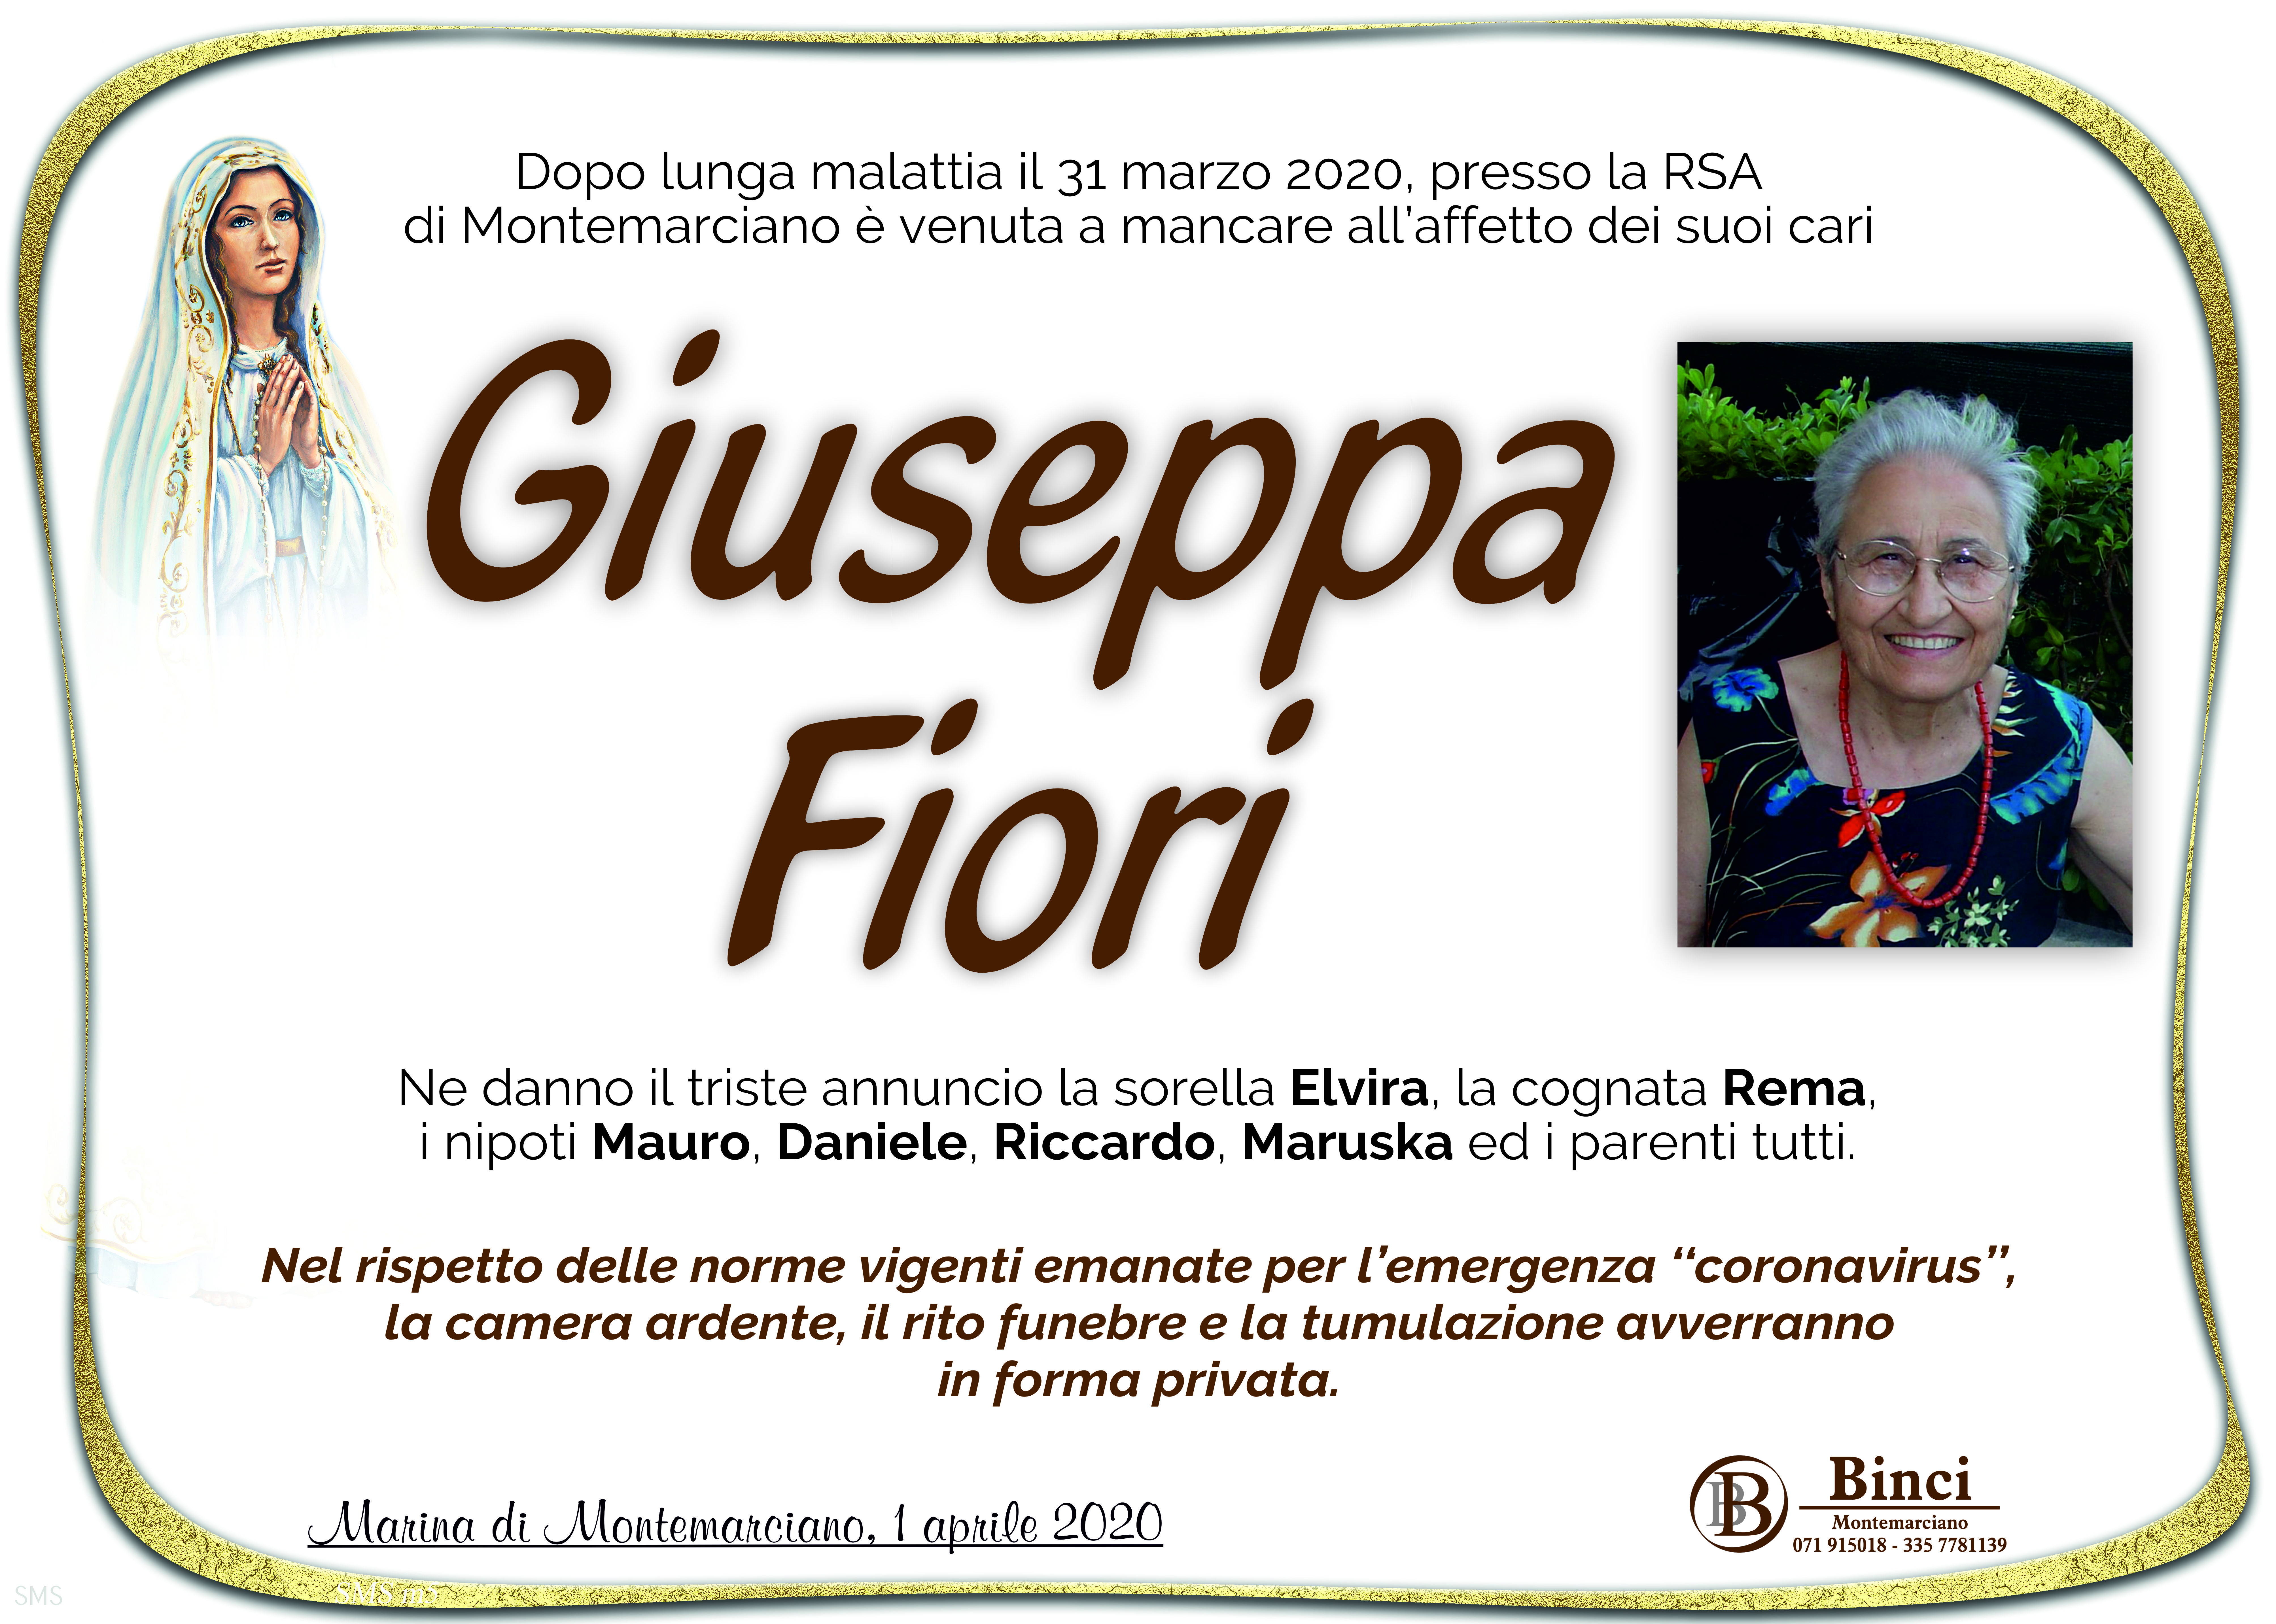 Giuseppa Fiori